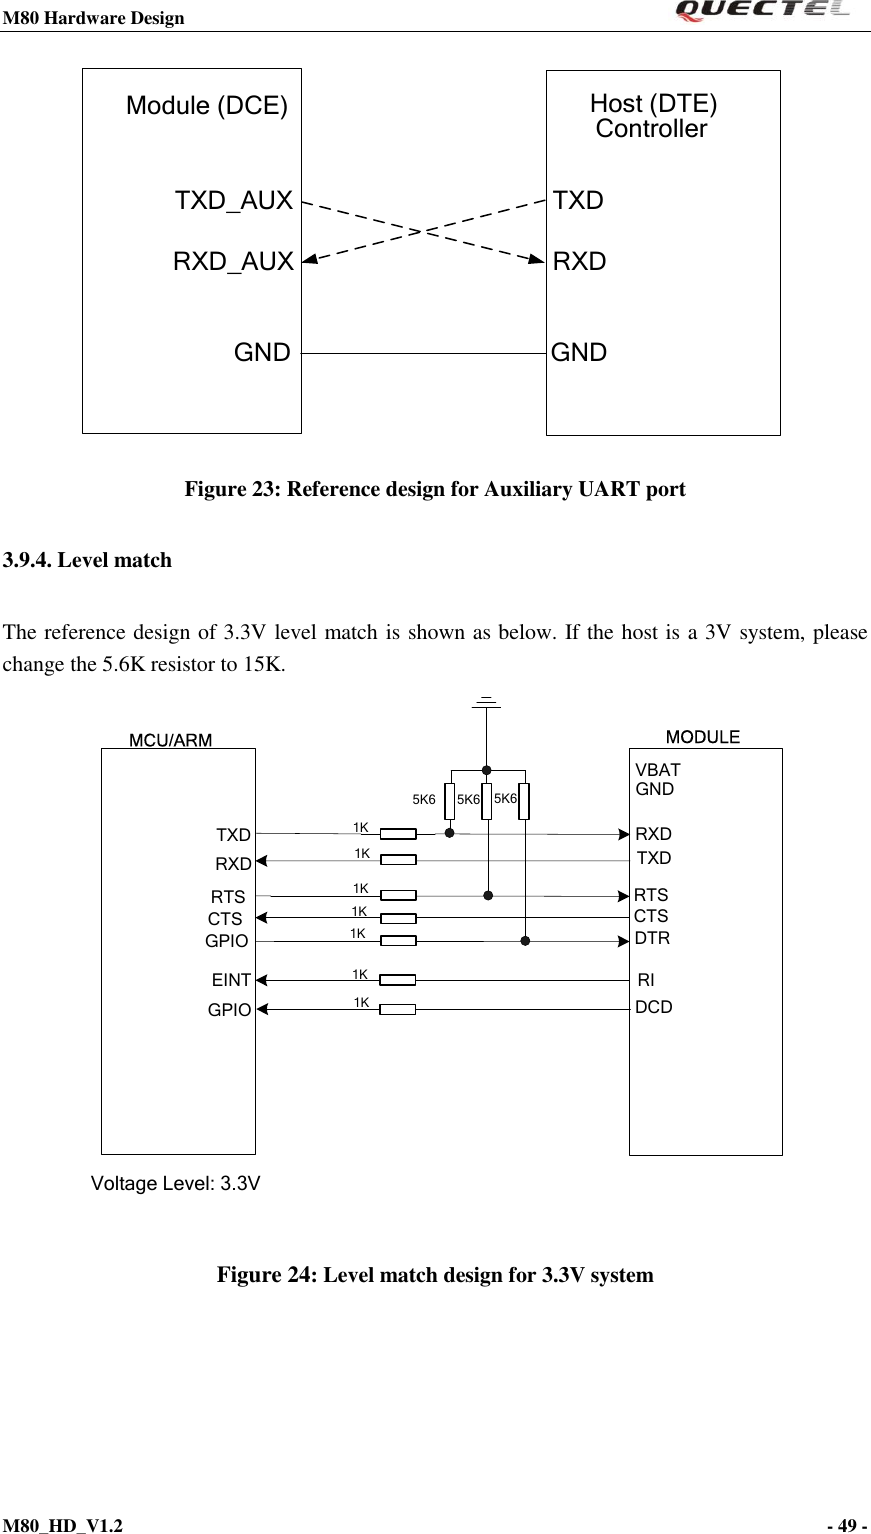 M80 Hardware Design                                                                M80_HD_V1.2                                                                                                                                        - 49 -     Module (DCE) Host (DTE) ControllerTXDRXDGNDTXD_AUXRXD_AUXGND Figure 23: Reference design for Auxiliary UART port 3.9.4. Level match The reference design of 3.3V level match is shown as below. If the host is a 3V system, please change the 5.6K resistor to 15K. MCU/ARMTXDRXD1KTXDRXDRTSCTSDTRRIRTSCTSGPIOEINTVoltage Level: 3.3VGNDVBATGPIO DCDMODULE1K1K1K1K5K6 5K6 5K61K1K Figure 24: Level match design for 3.3V system     